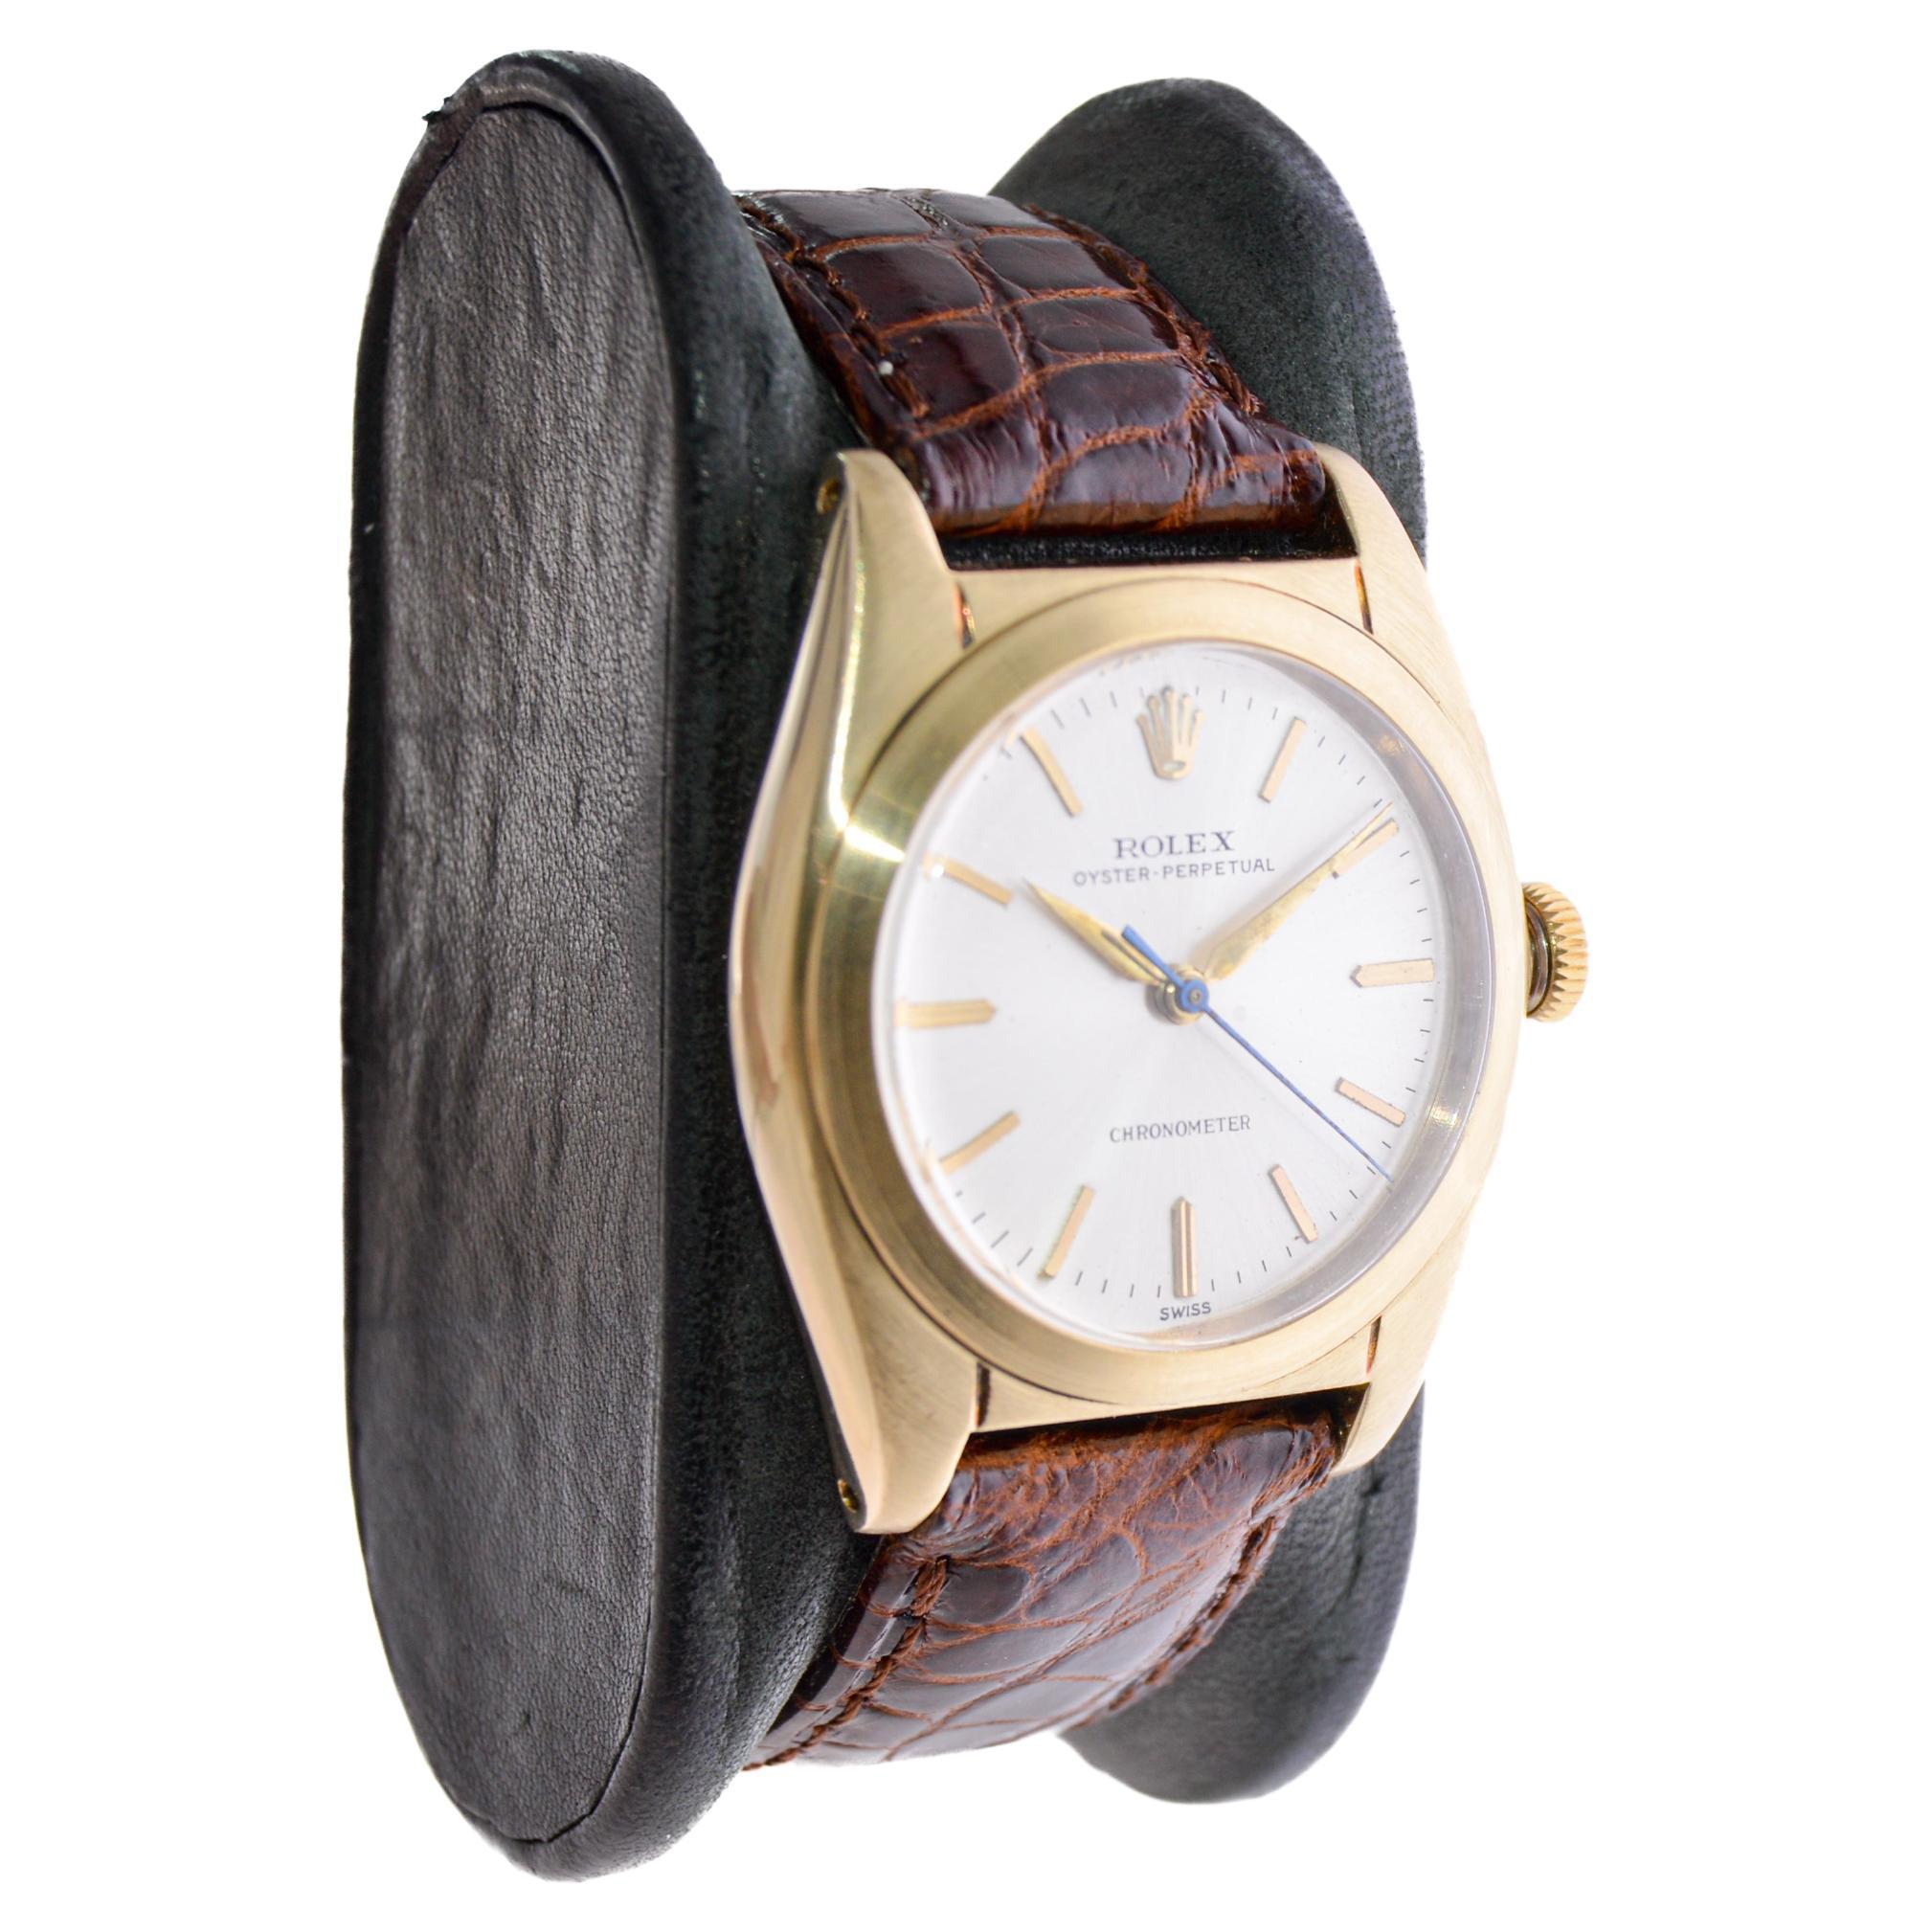 FABRIK / HAUS: Rolex Watch Company
STIL / REFERENZ: Oyster Perpetual 